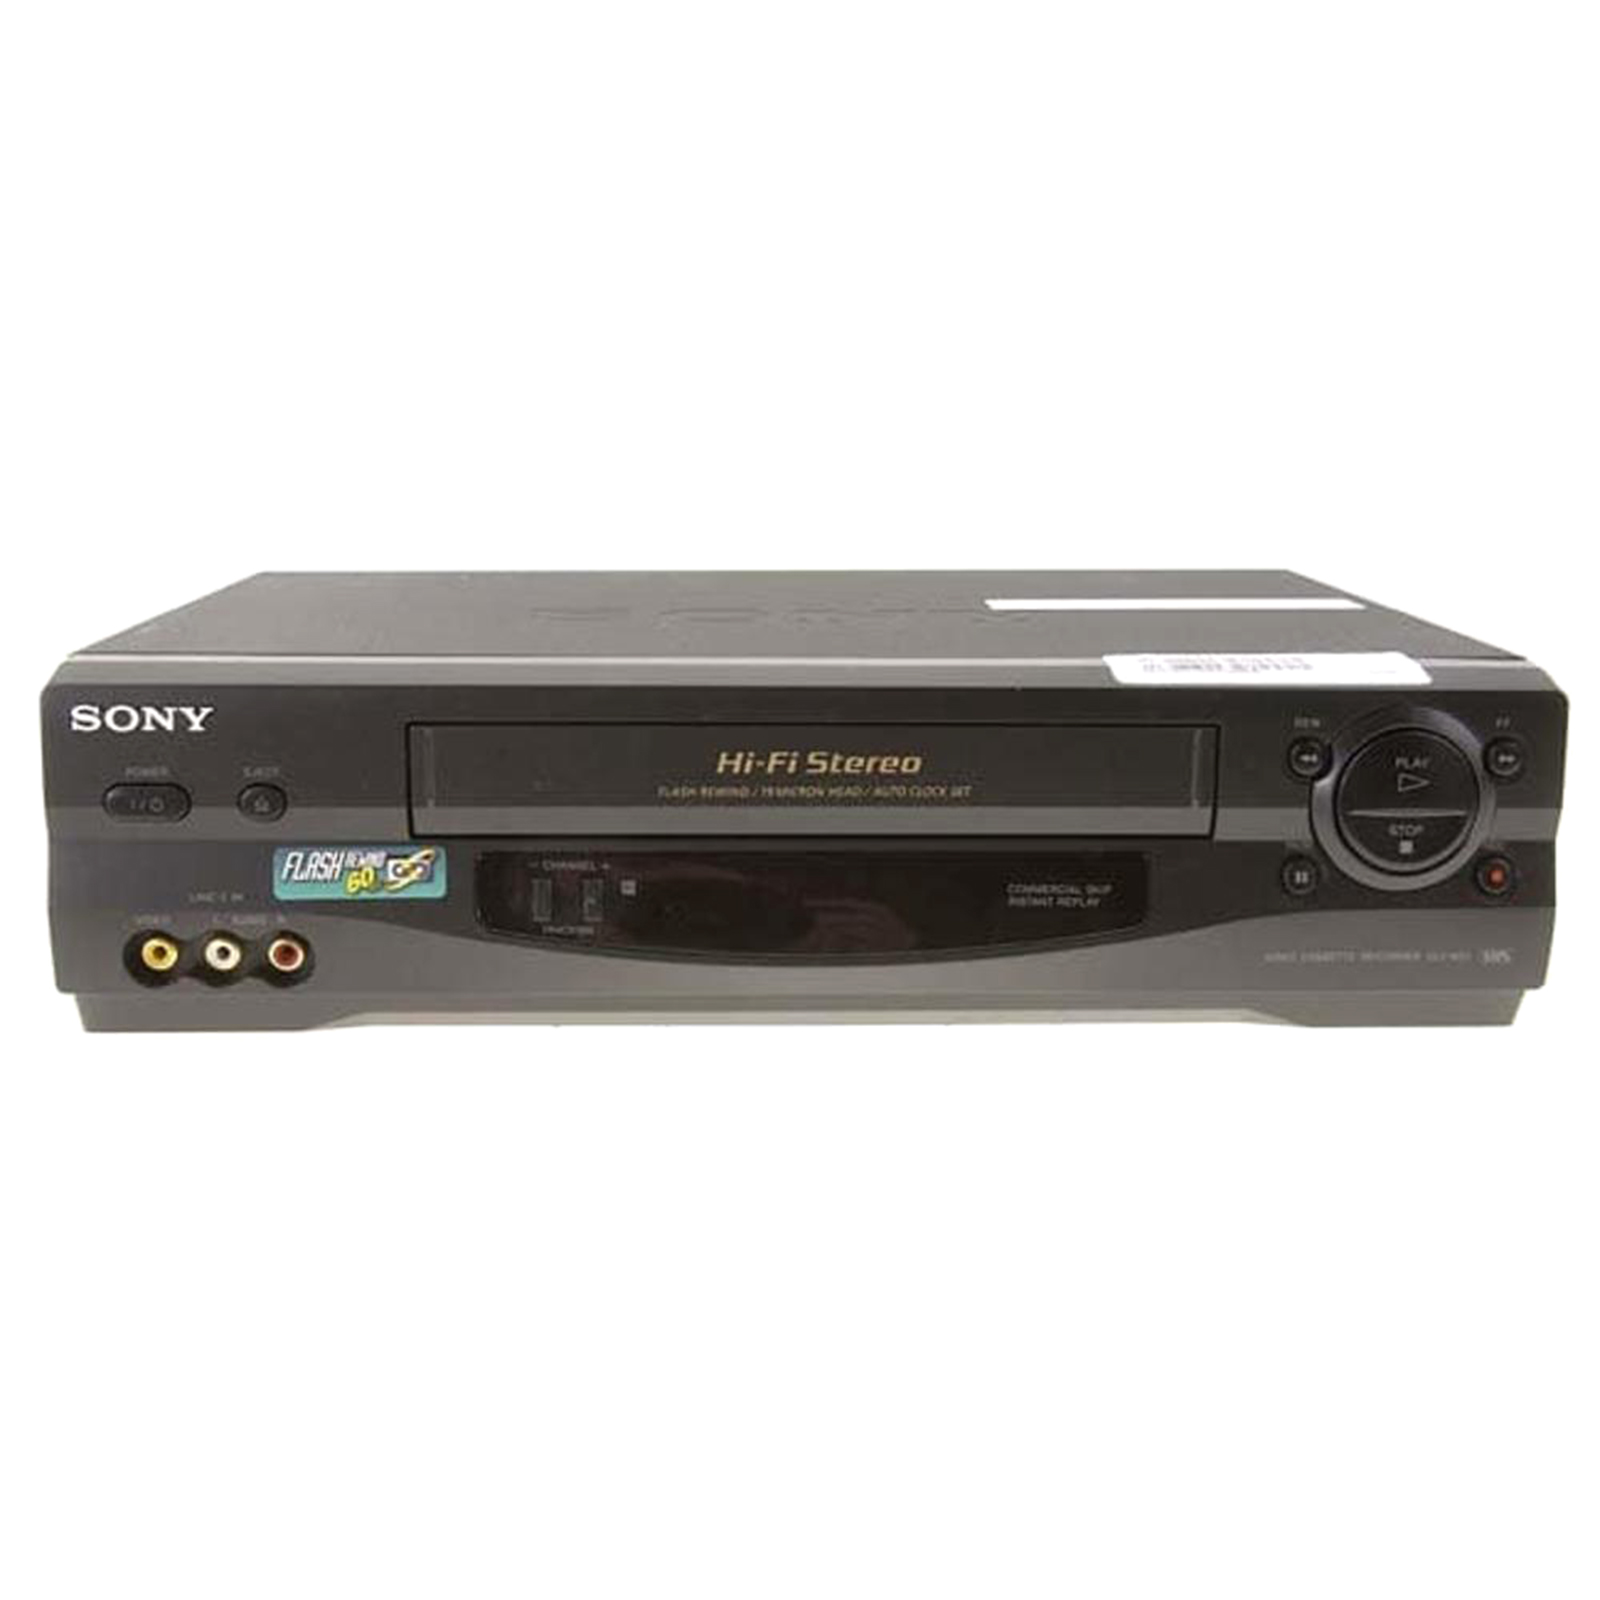 Sony SLV-N55  4-Head Hi-Fi VCR - Black